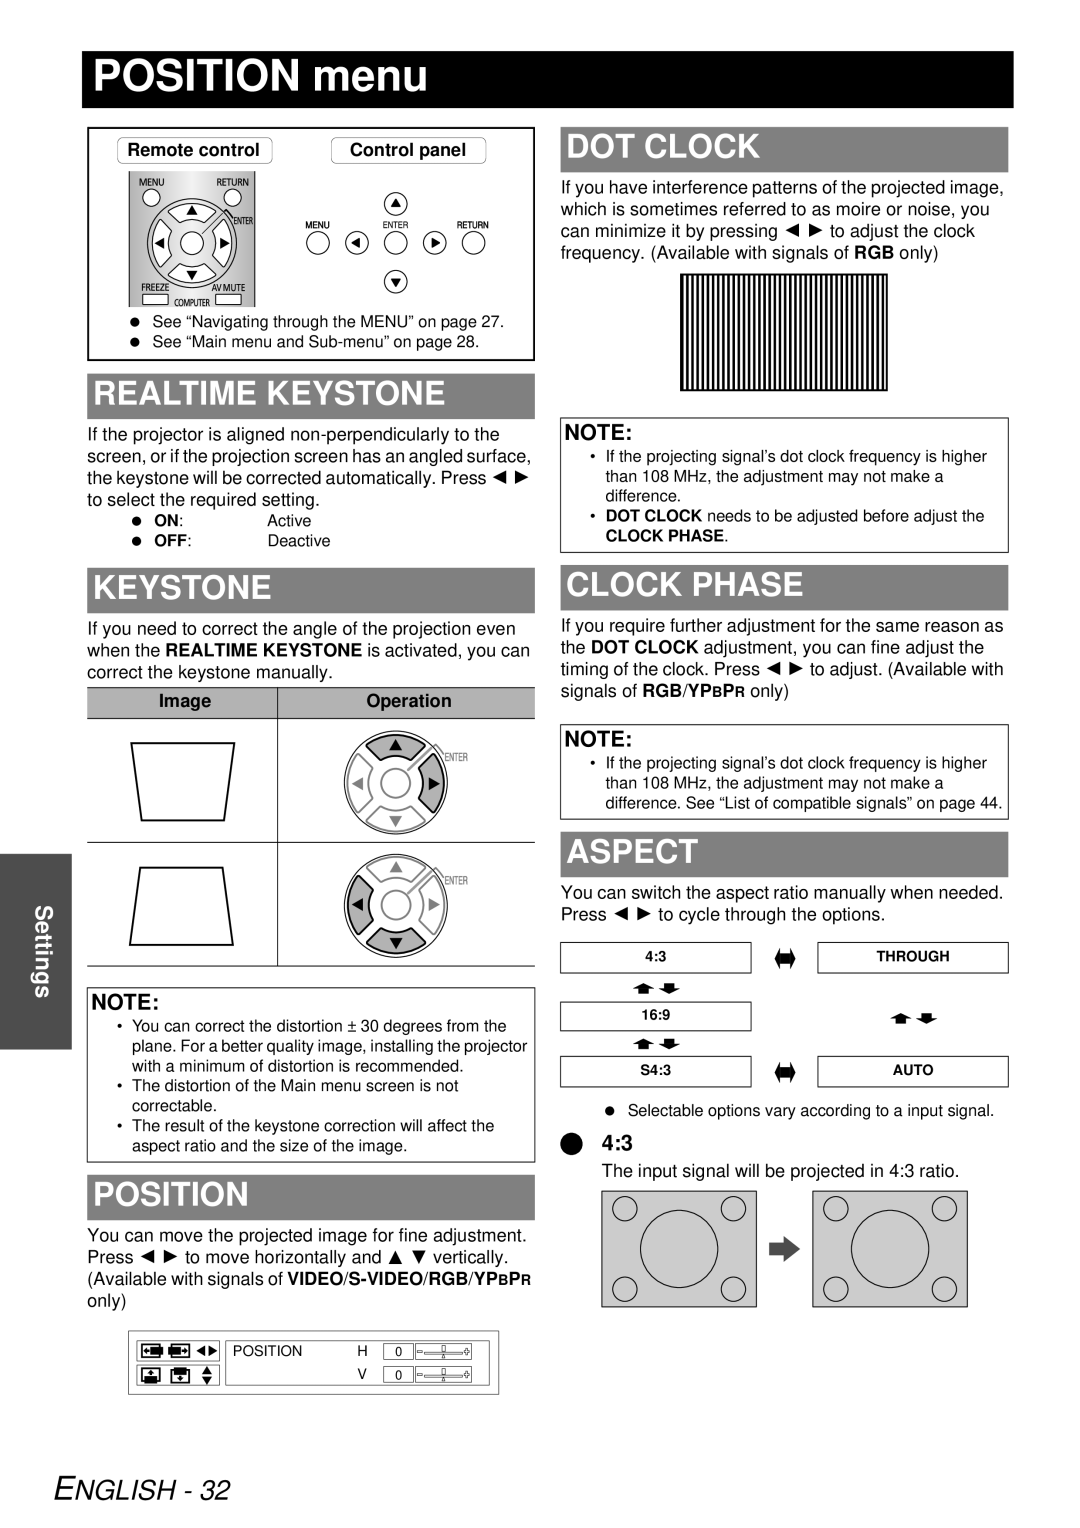 Panasonic PT-LB78U manual POSITION menu, Dot Clock, Realtime Keystone, Position, Clock Phase, Aspect, English, Settings 